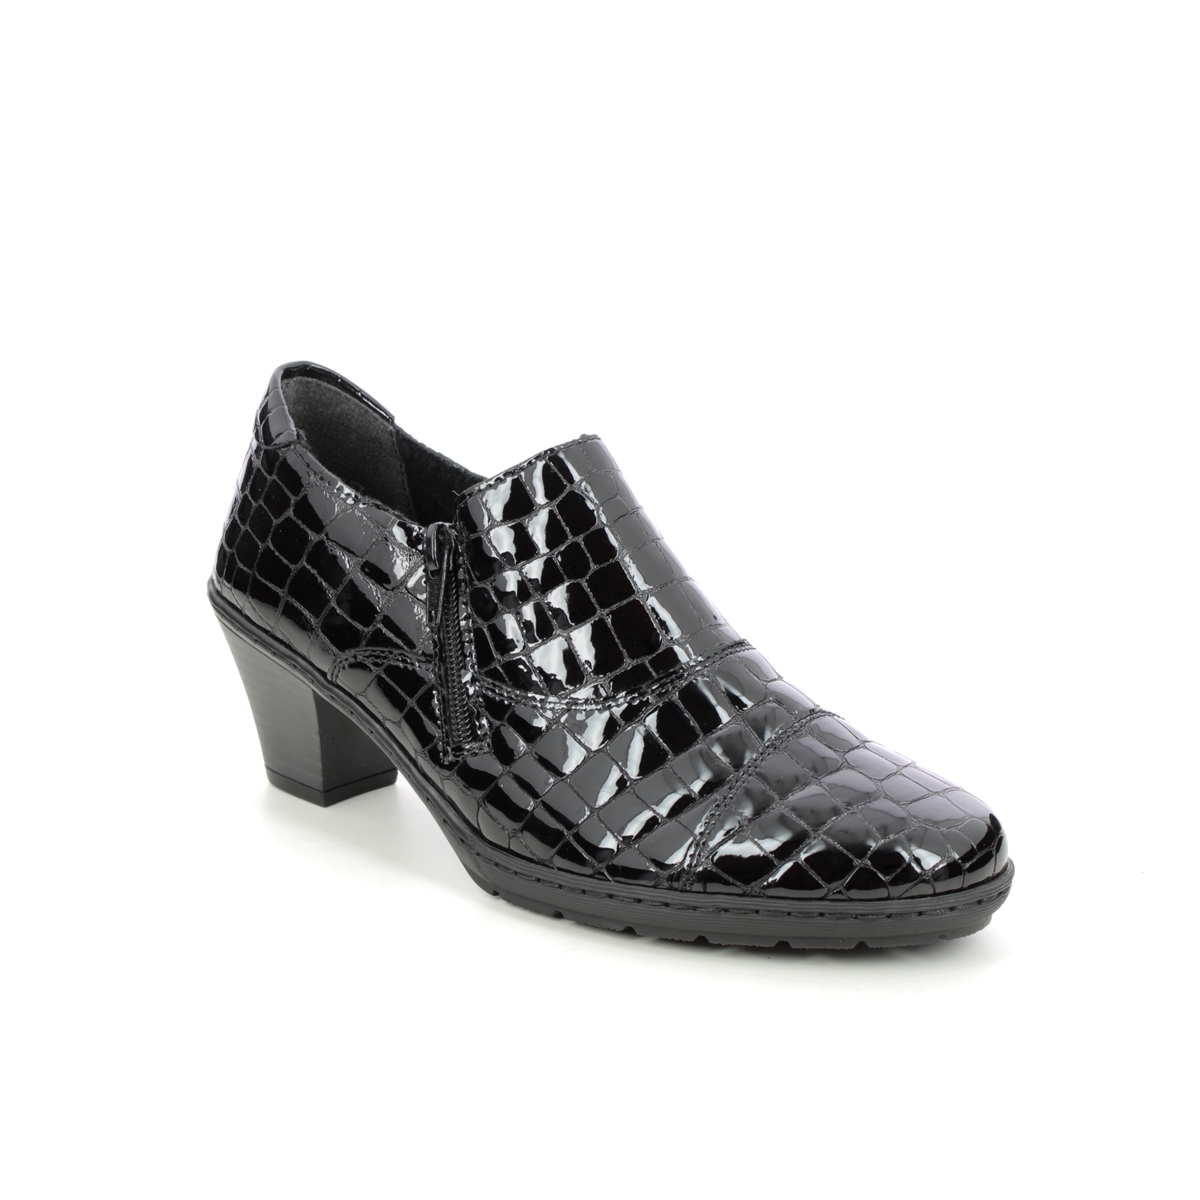 Rieker 57173-03 Black croc Womens shoe-boots in a Plain Leather in Size 39